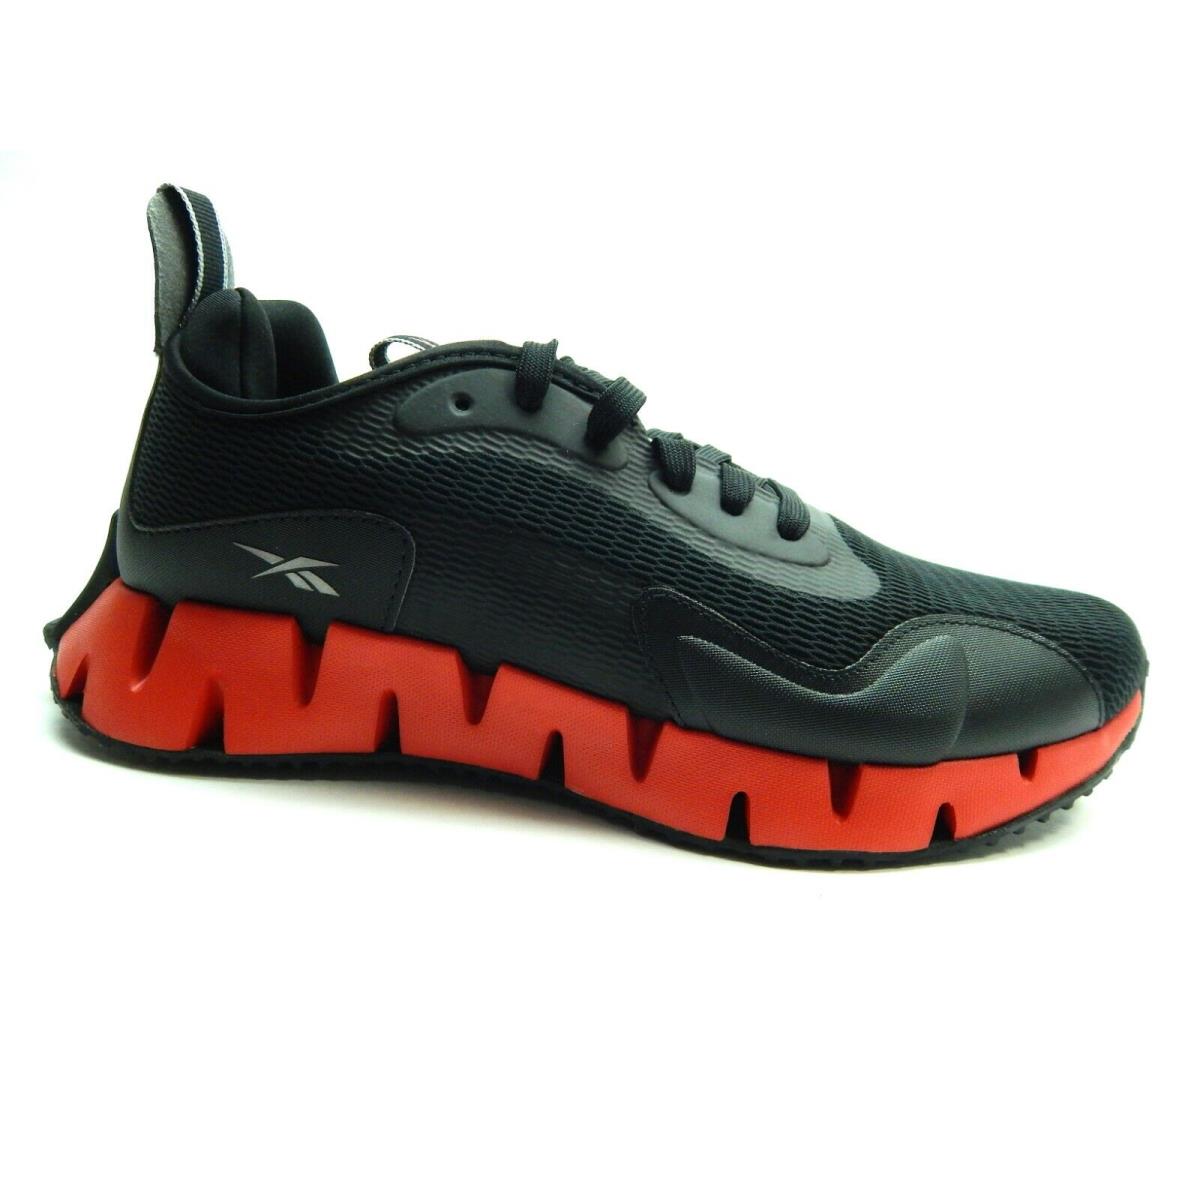 Reebok Zig Dynamica Running fy7054 Black Red Pewter Men Shoes